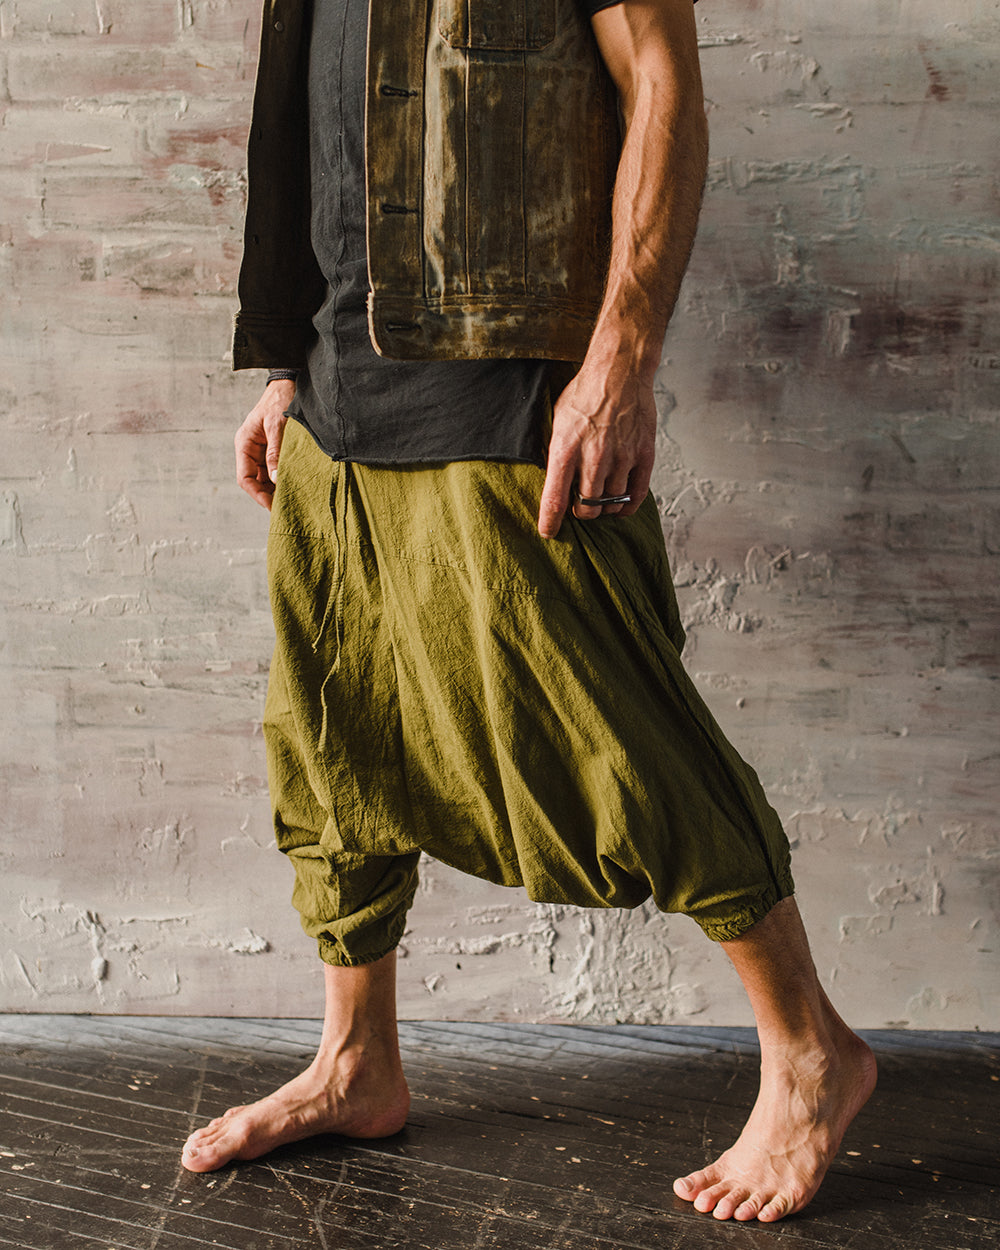 Unisex genie pants by Buddha Pants®